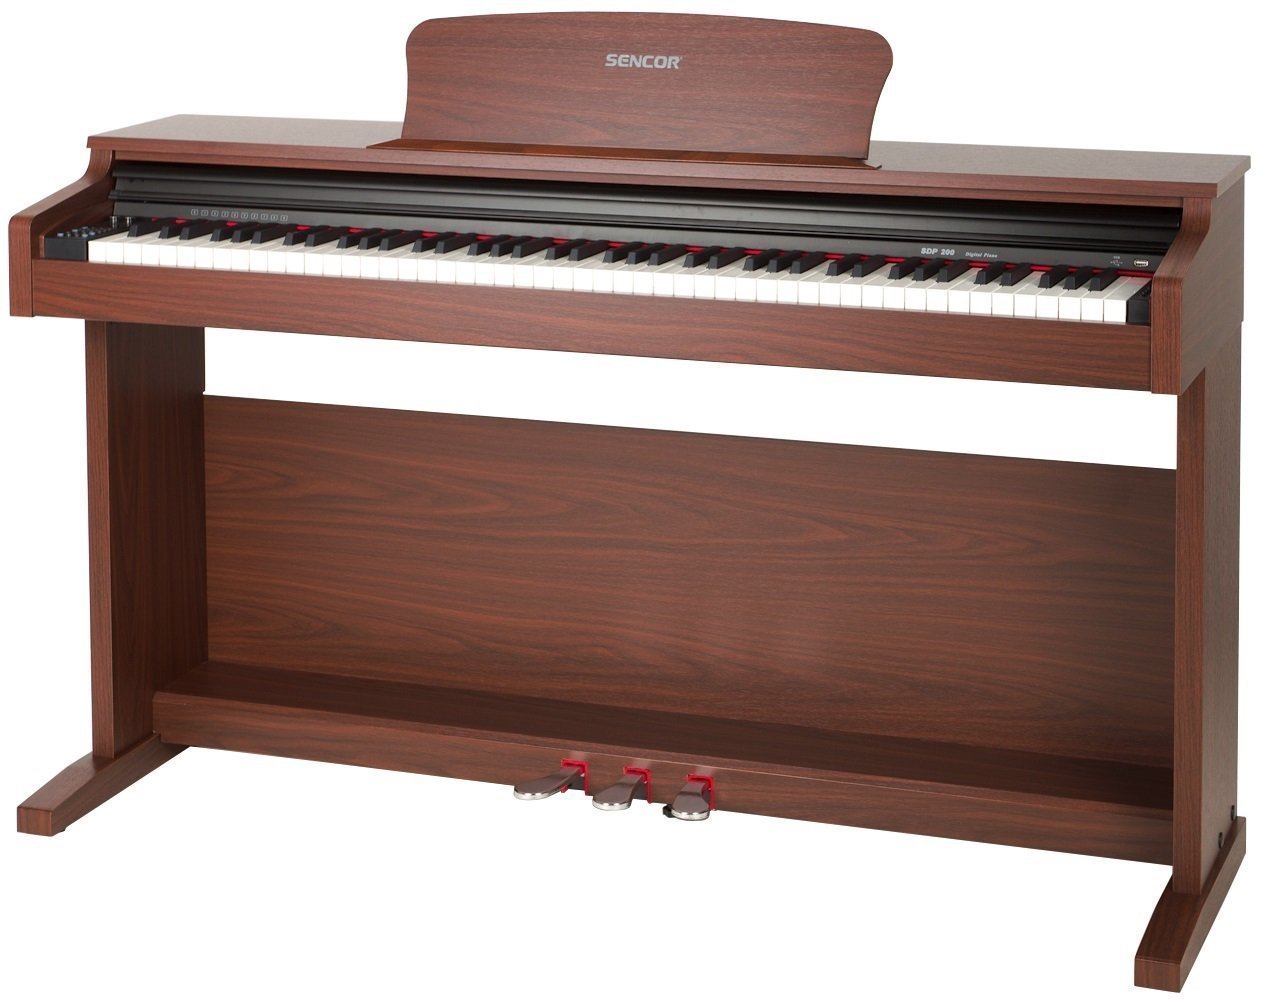 Piano digital SENCOR SDP 200 Brown Piano digital